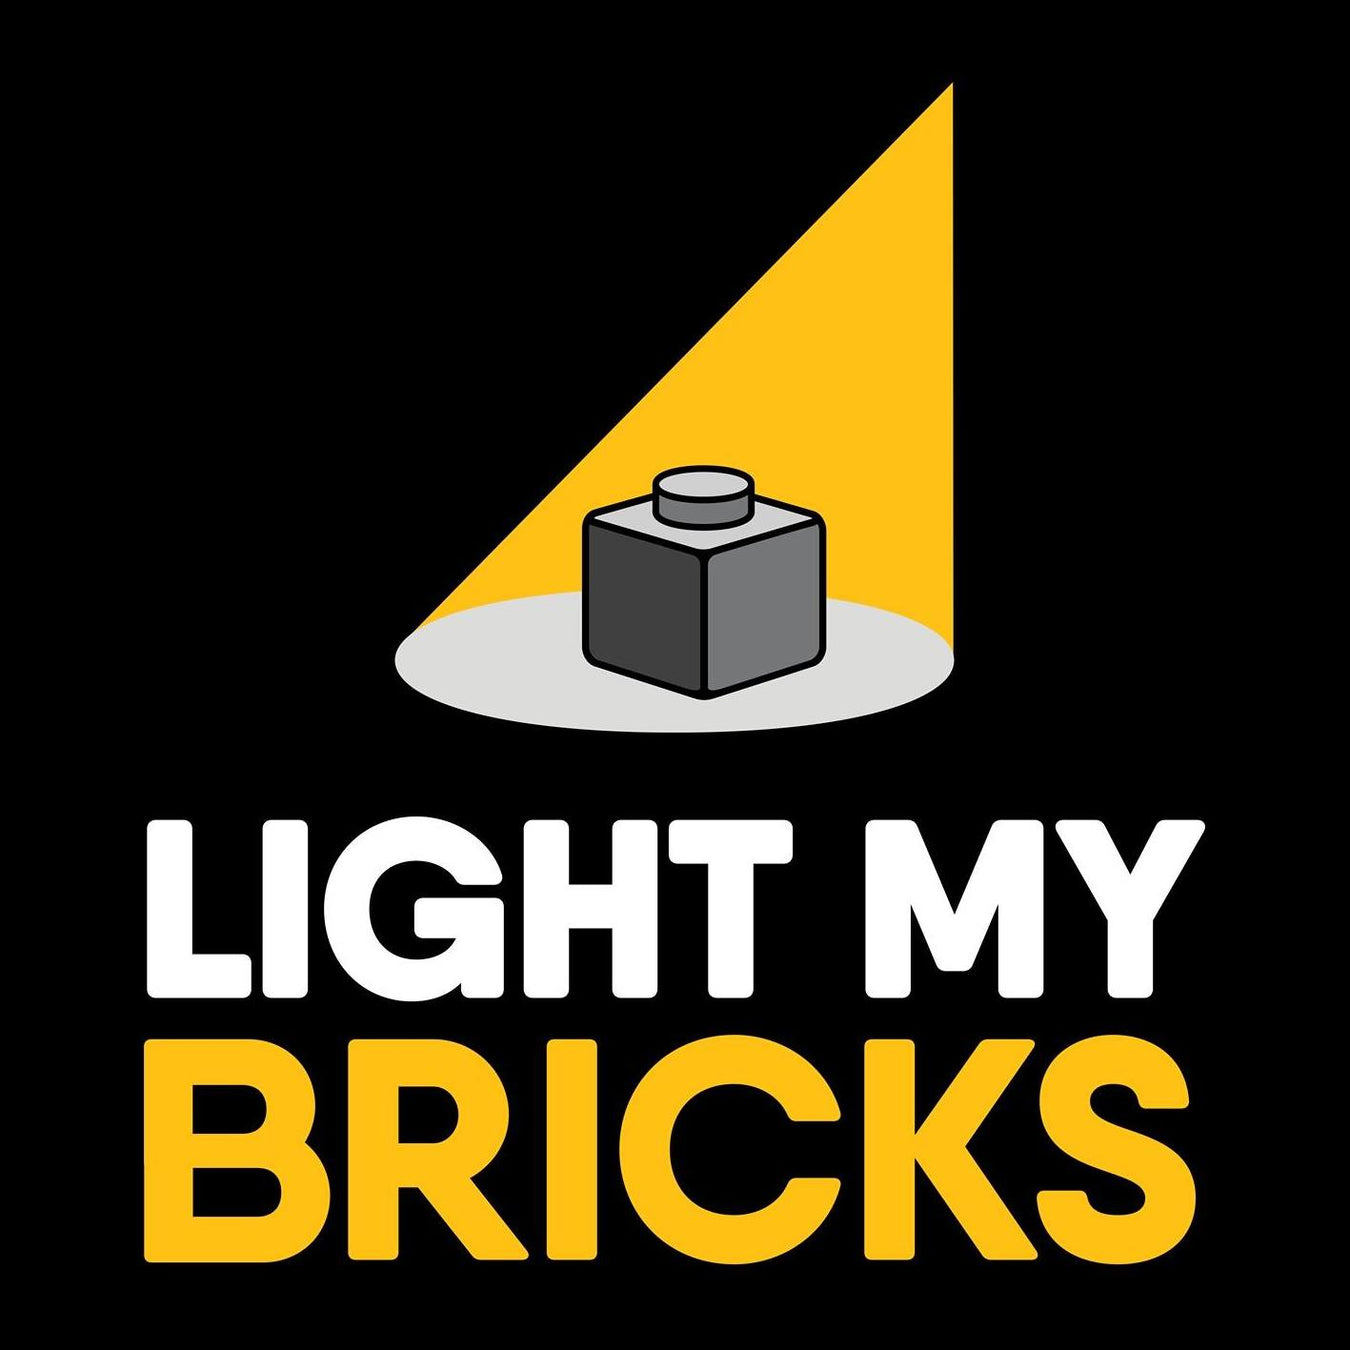 Light my bricks